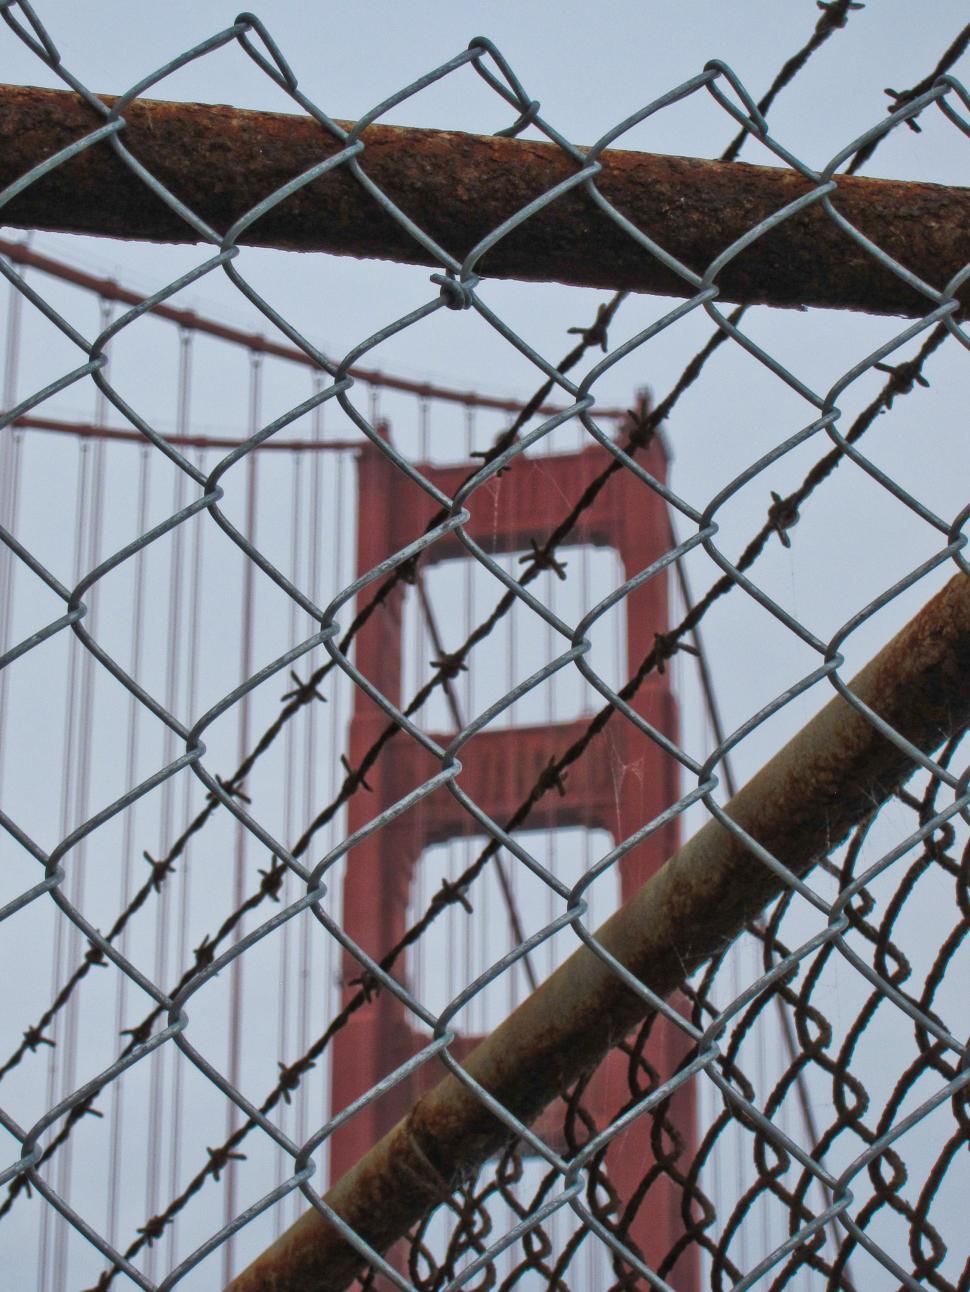 Free Image of Secure Golden Gate Bridge 